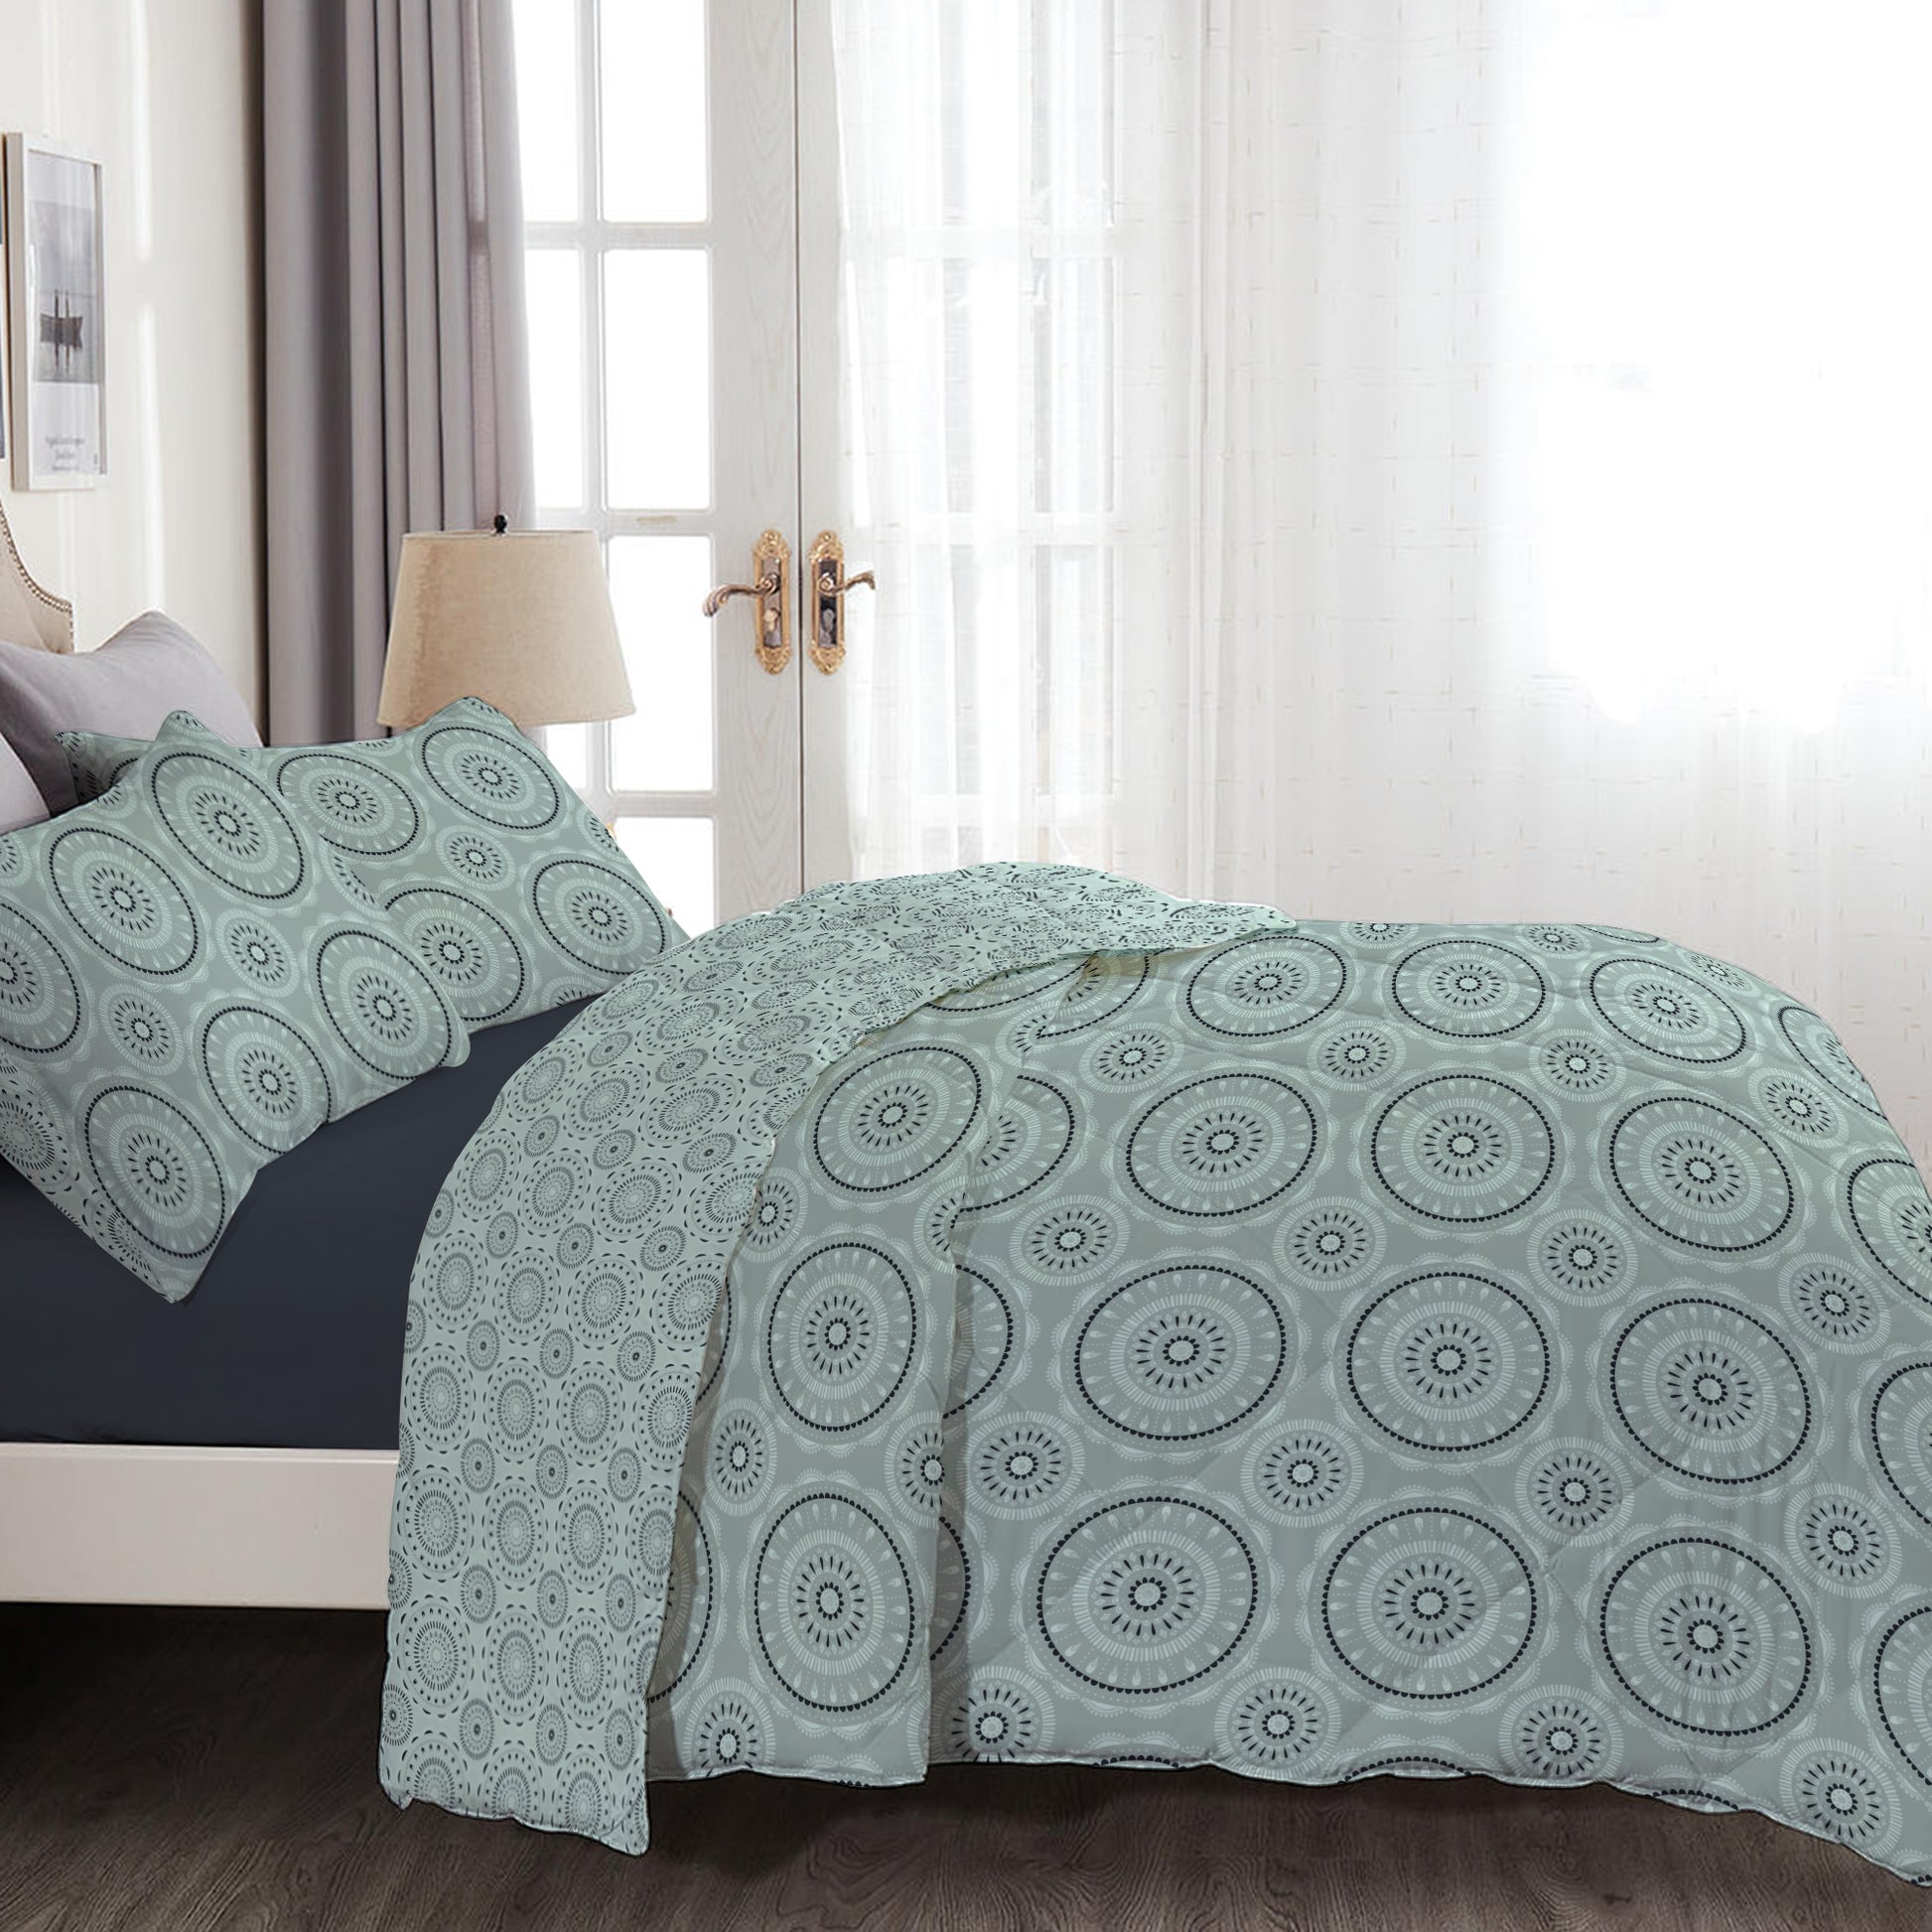 4-Piece Luxury Cotton Comforter Set Queen/King Size Circular Motif